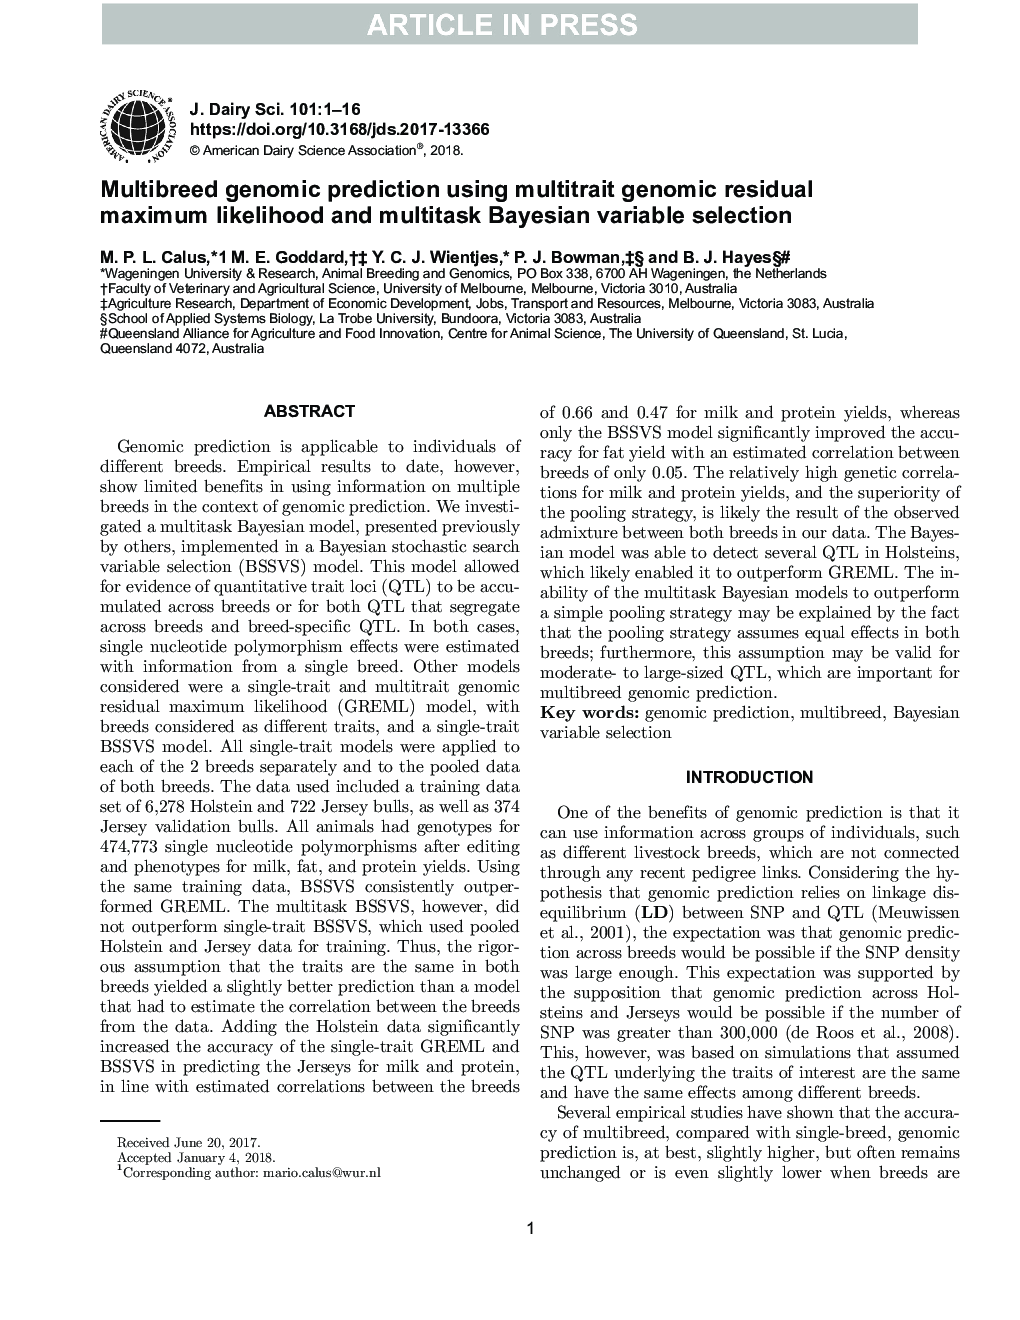 Multibreed genomic prediction using multitrait genomic residual maximum likelihood and multitask Bayesian variable selection